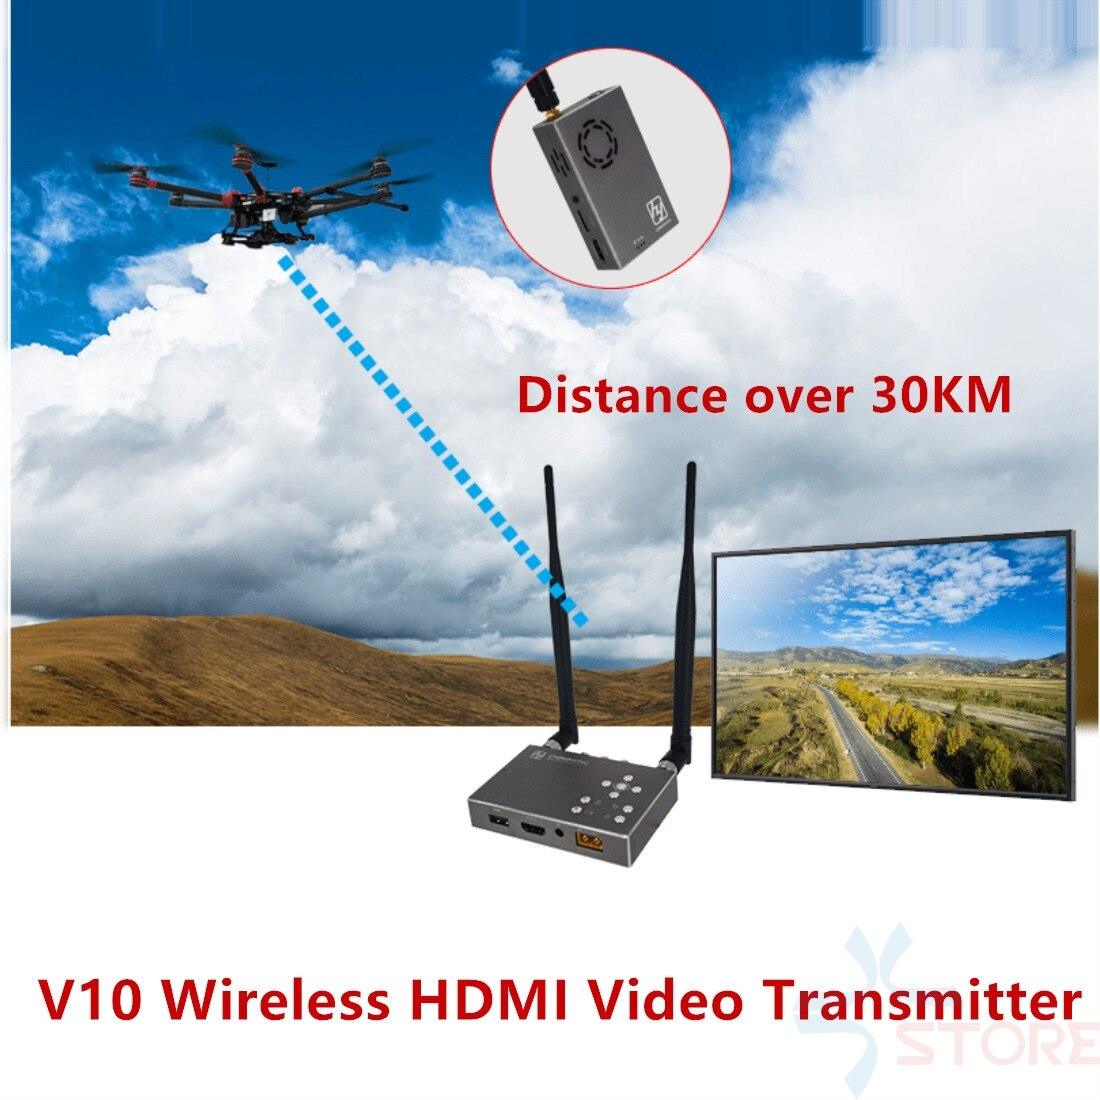 Over 30KM Wireless HDMI image Transmission - 100-900Mhz Full HD 1080P COFDM Digital FPV Wireless Video Transmitter Long Range System of Drone - RCDrone